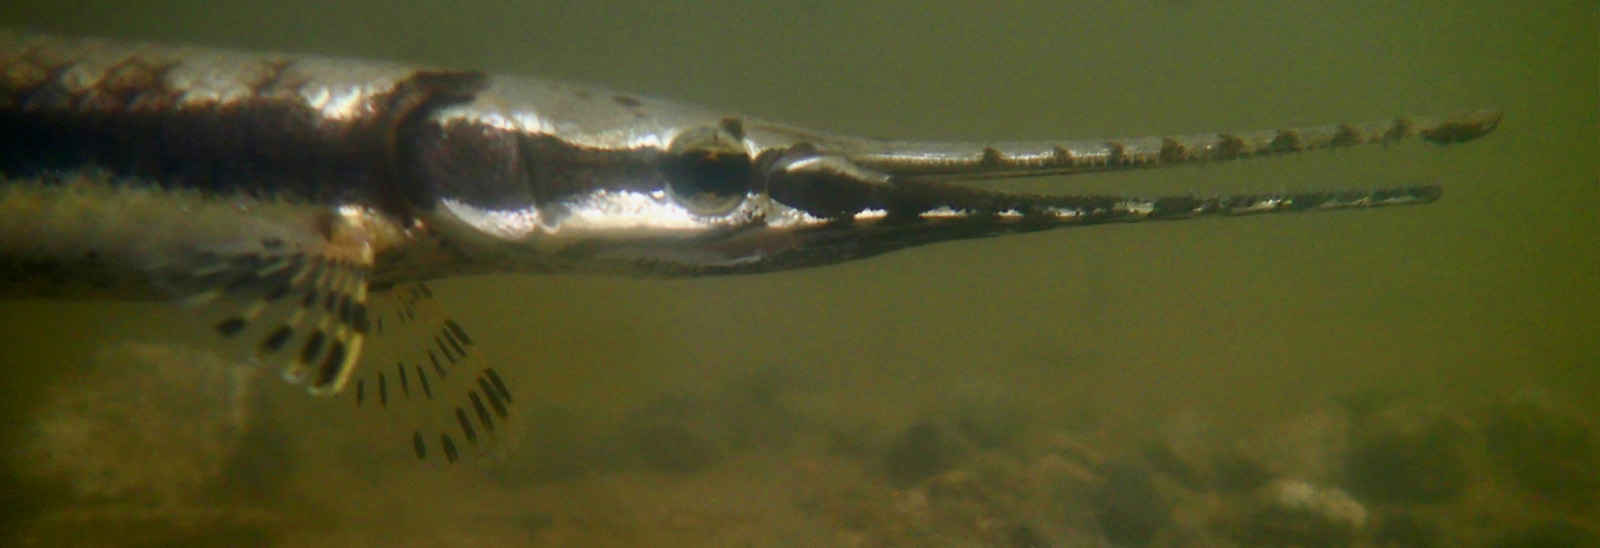 A small gar underwater